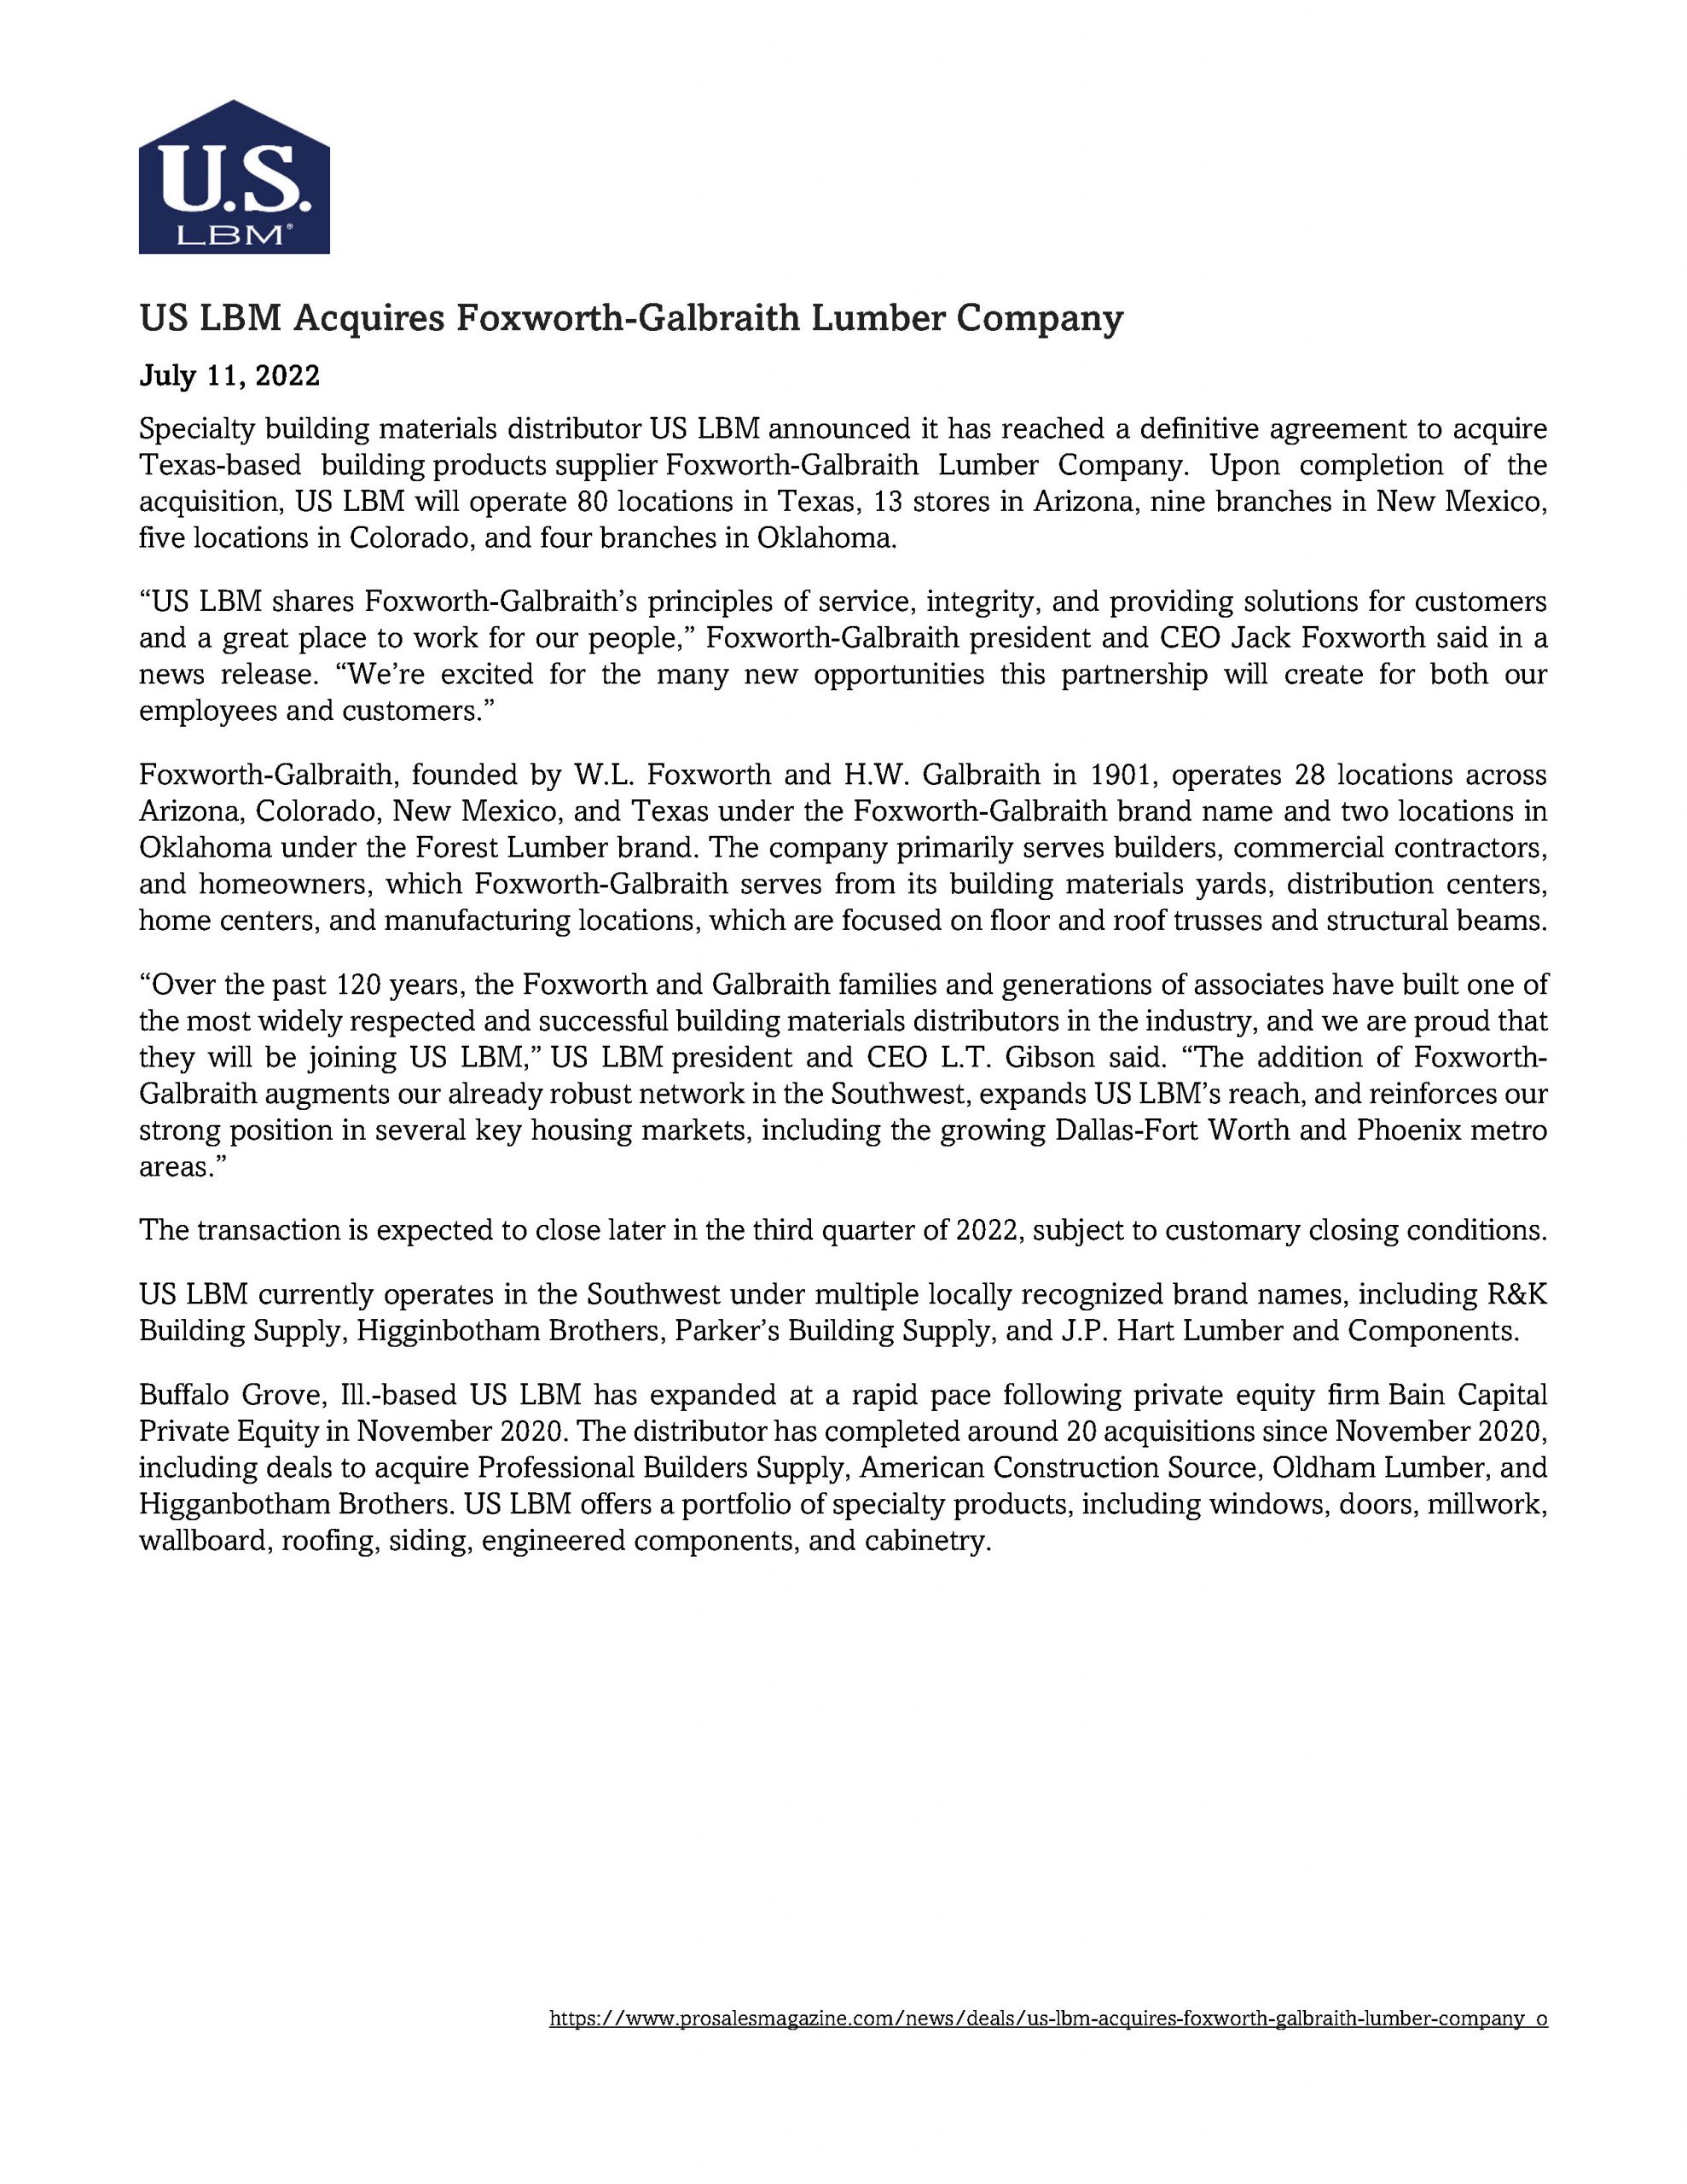 US LBM Acquires Foxworth-Galbraith Lumber Company 7.11.22